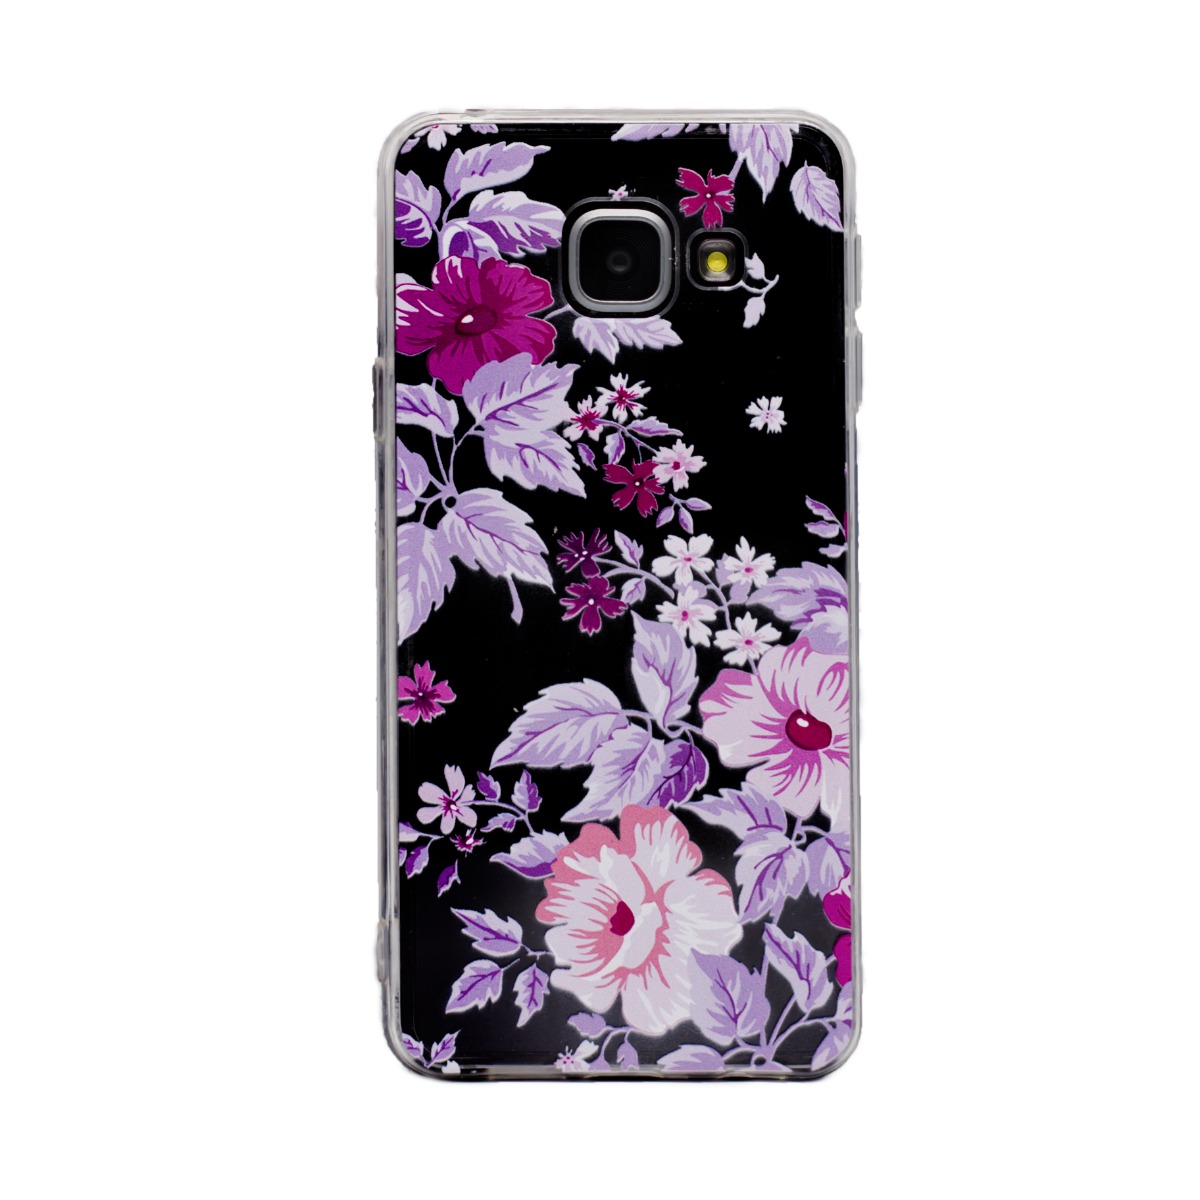 Carcasa Fashion Samsung Galaxy A3 2016, Transparenta cu Flori thumb